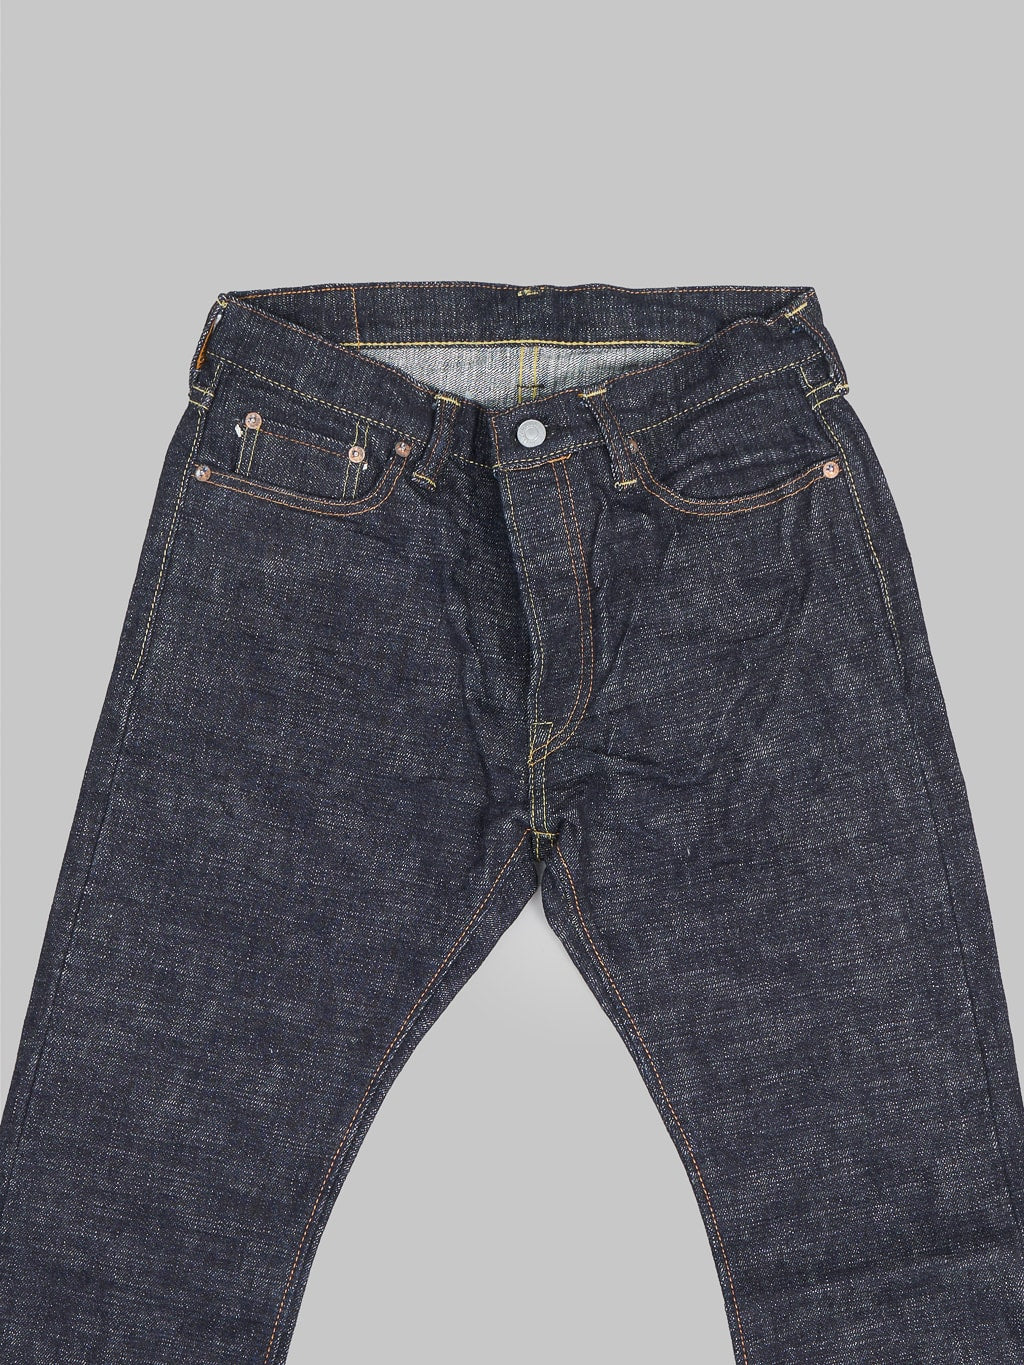 The Strike Gold 7109 Ultra Slubby Slim Tapered Jeans